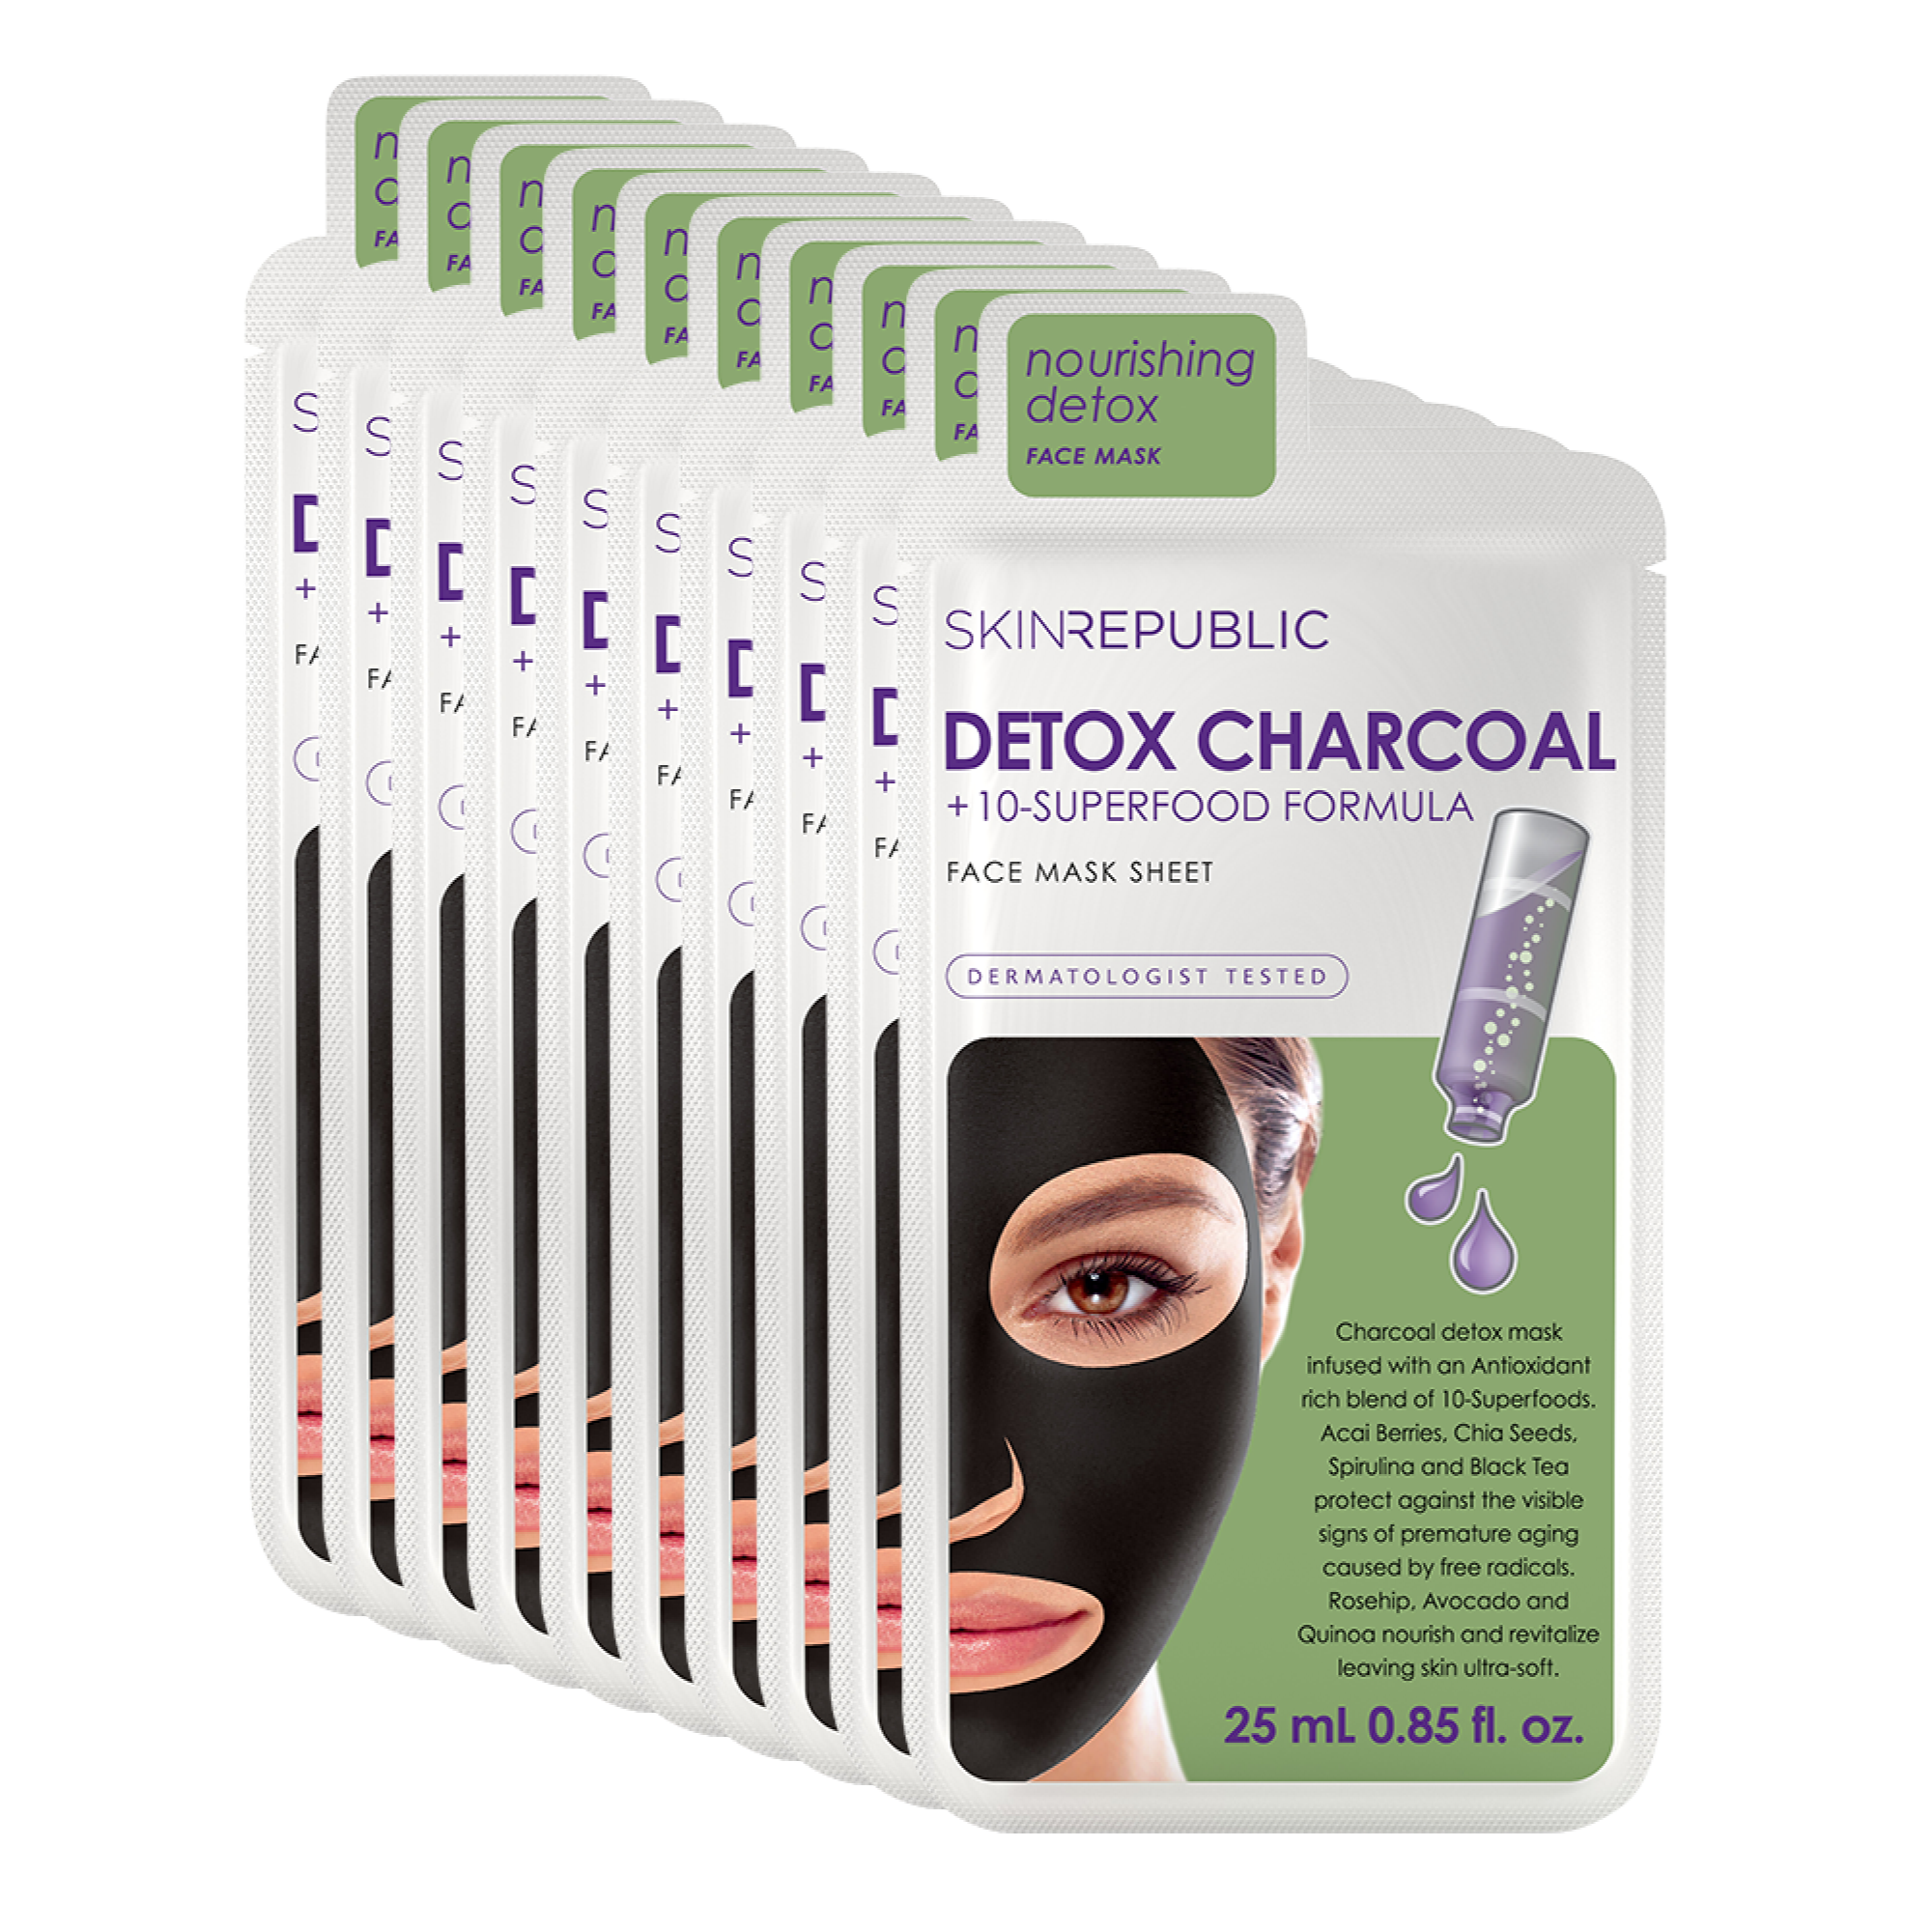 Detox Charcoal + 10-Superfood Formula Face Mask - 10 Pack